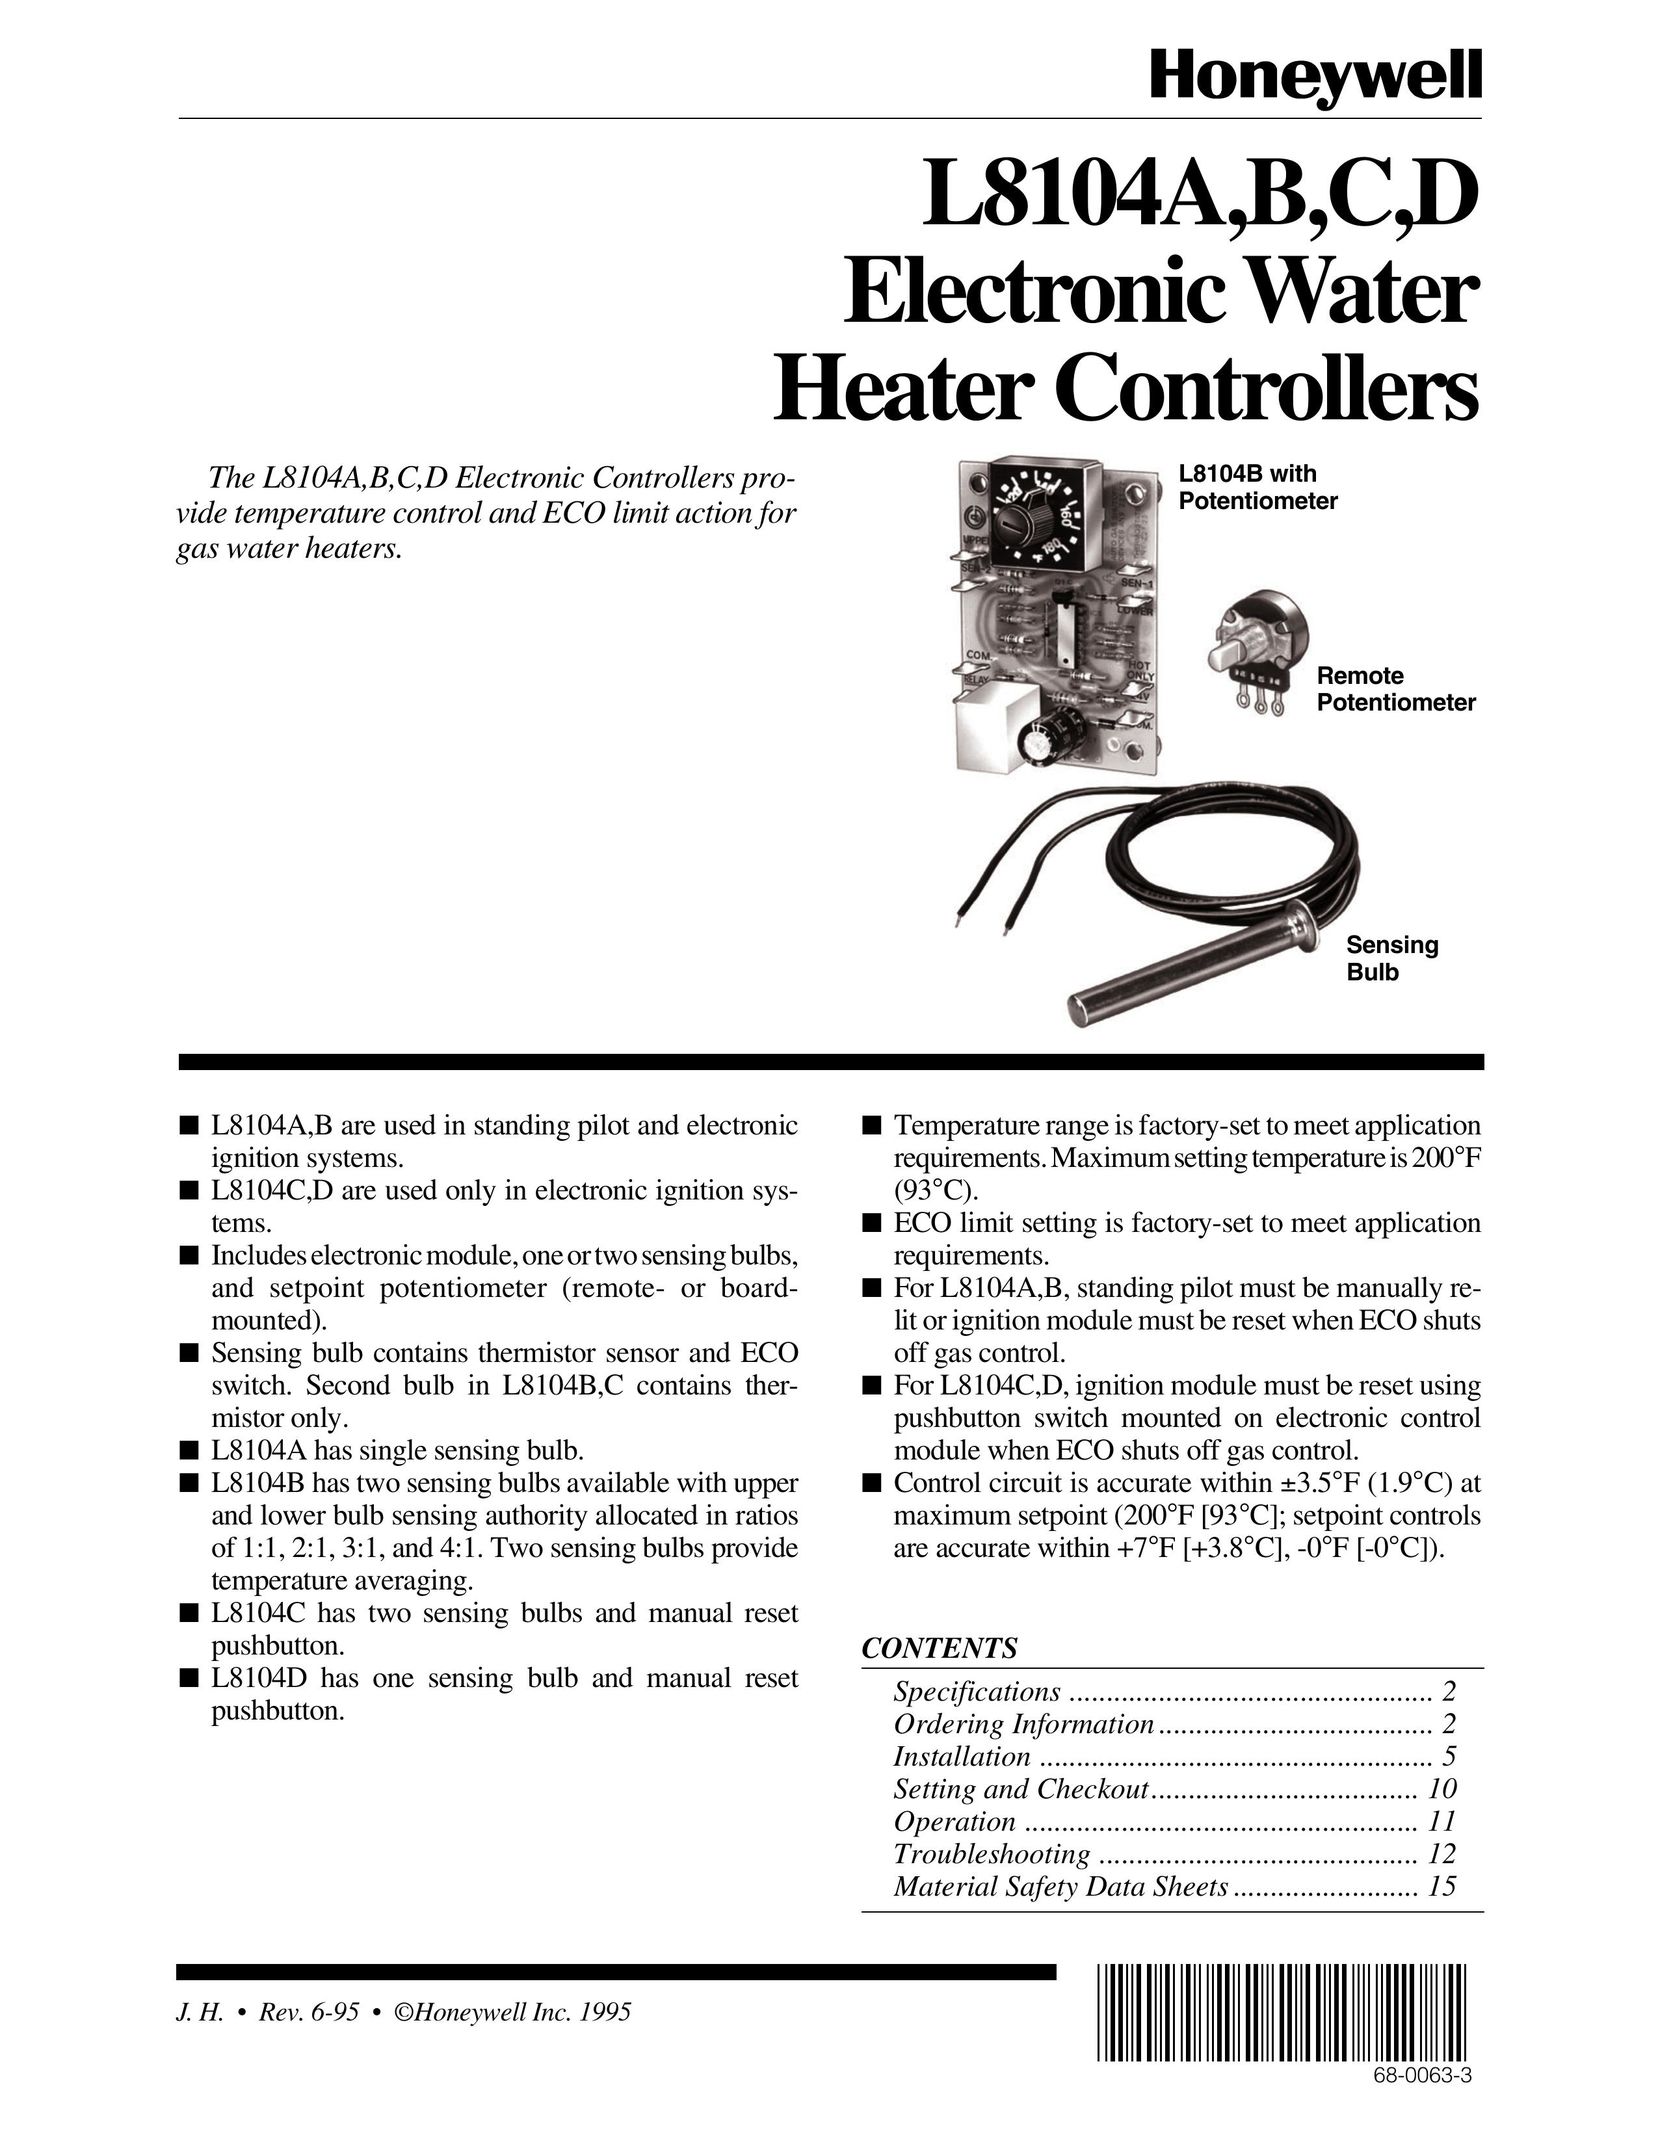 Honeywell L8104A Water Heater User Manual